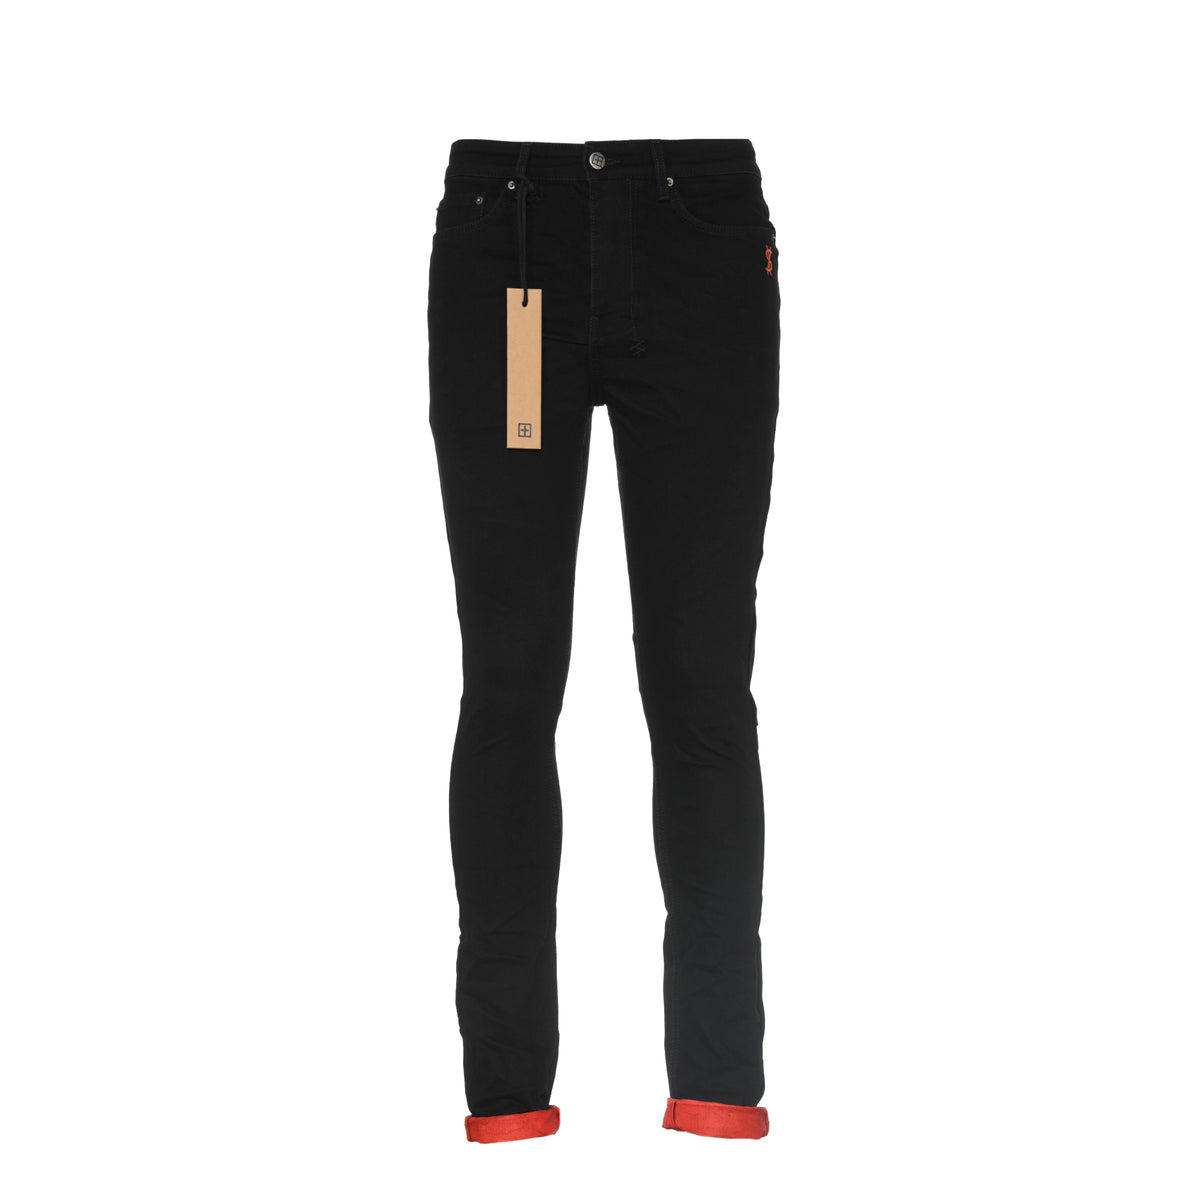 Ksubi Chitch Roll Up Orange Men's Skinny Jeans - SIZE Boutique